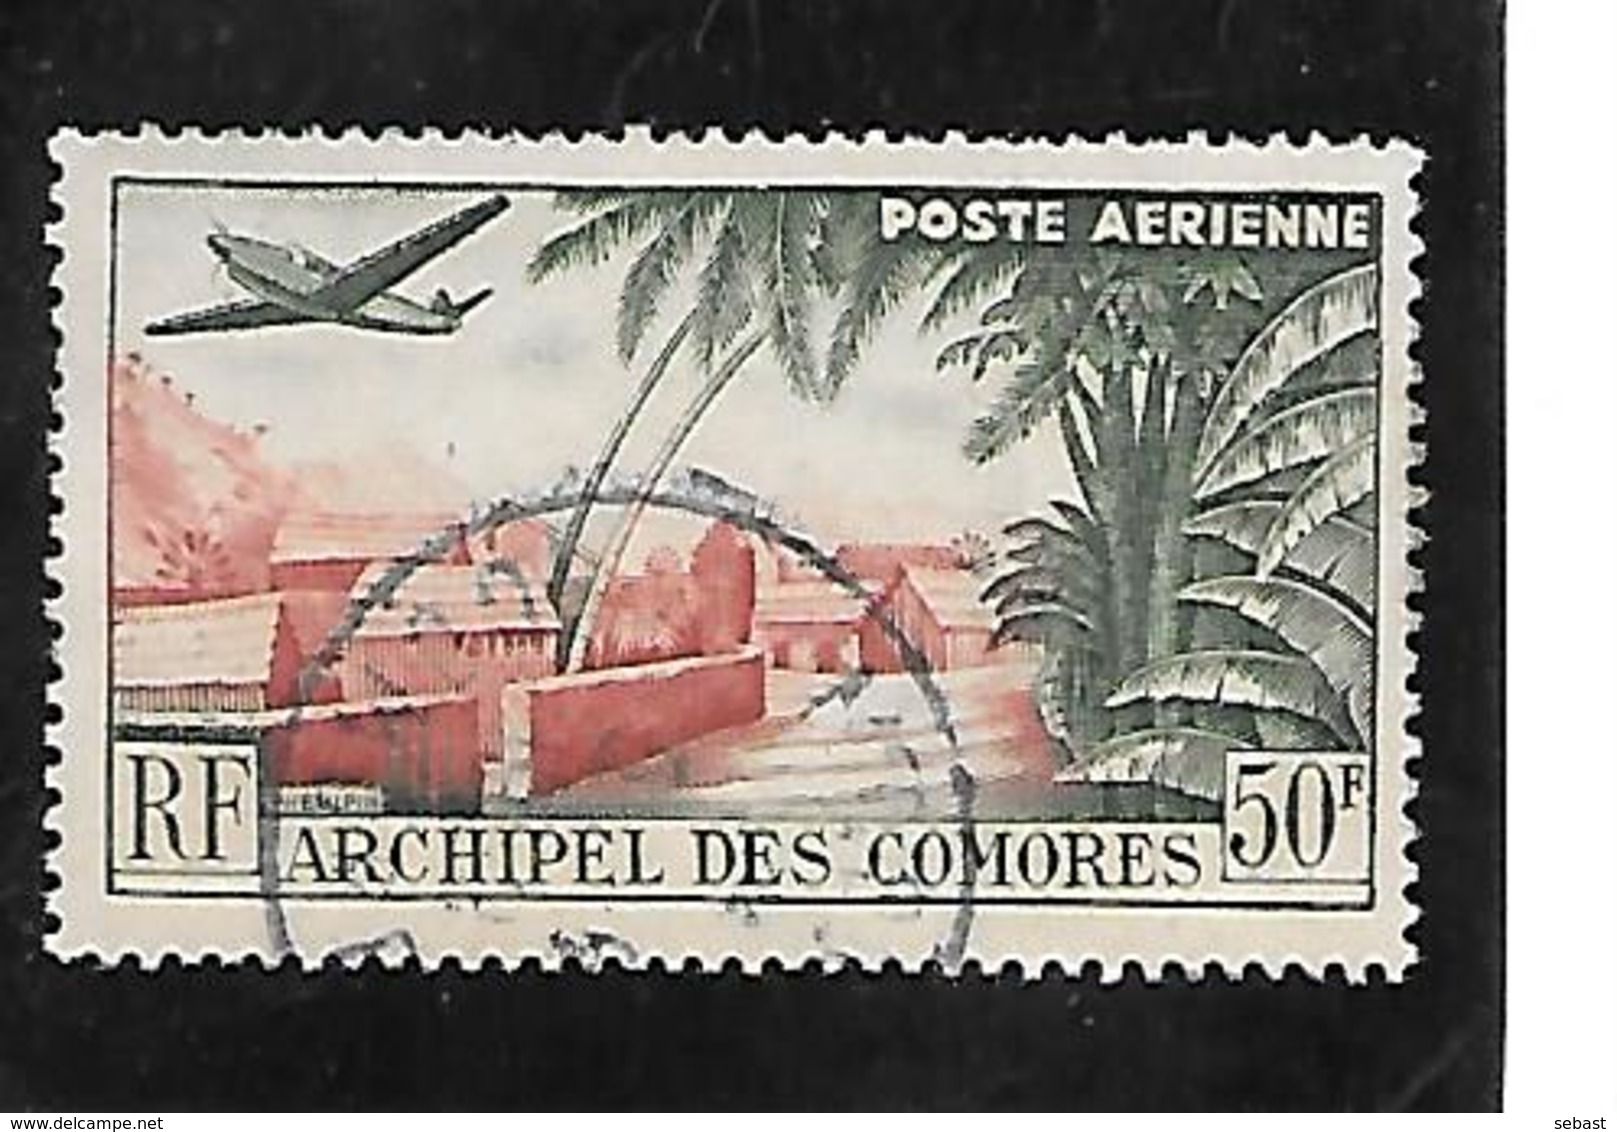 TIMBRE OBLITERE DES COMORES DE 1950 N° MICHEL 32 - Used Stamps